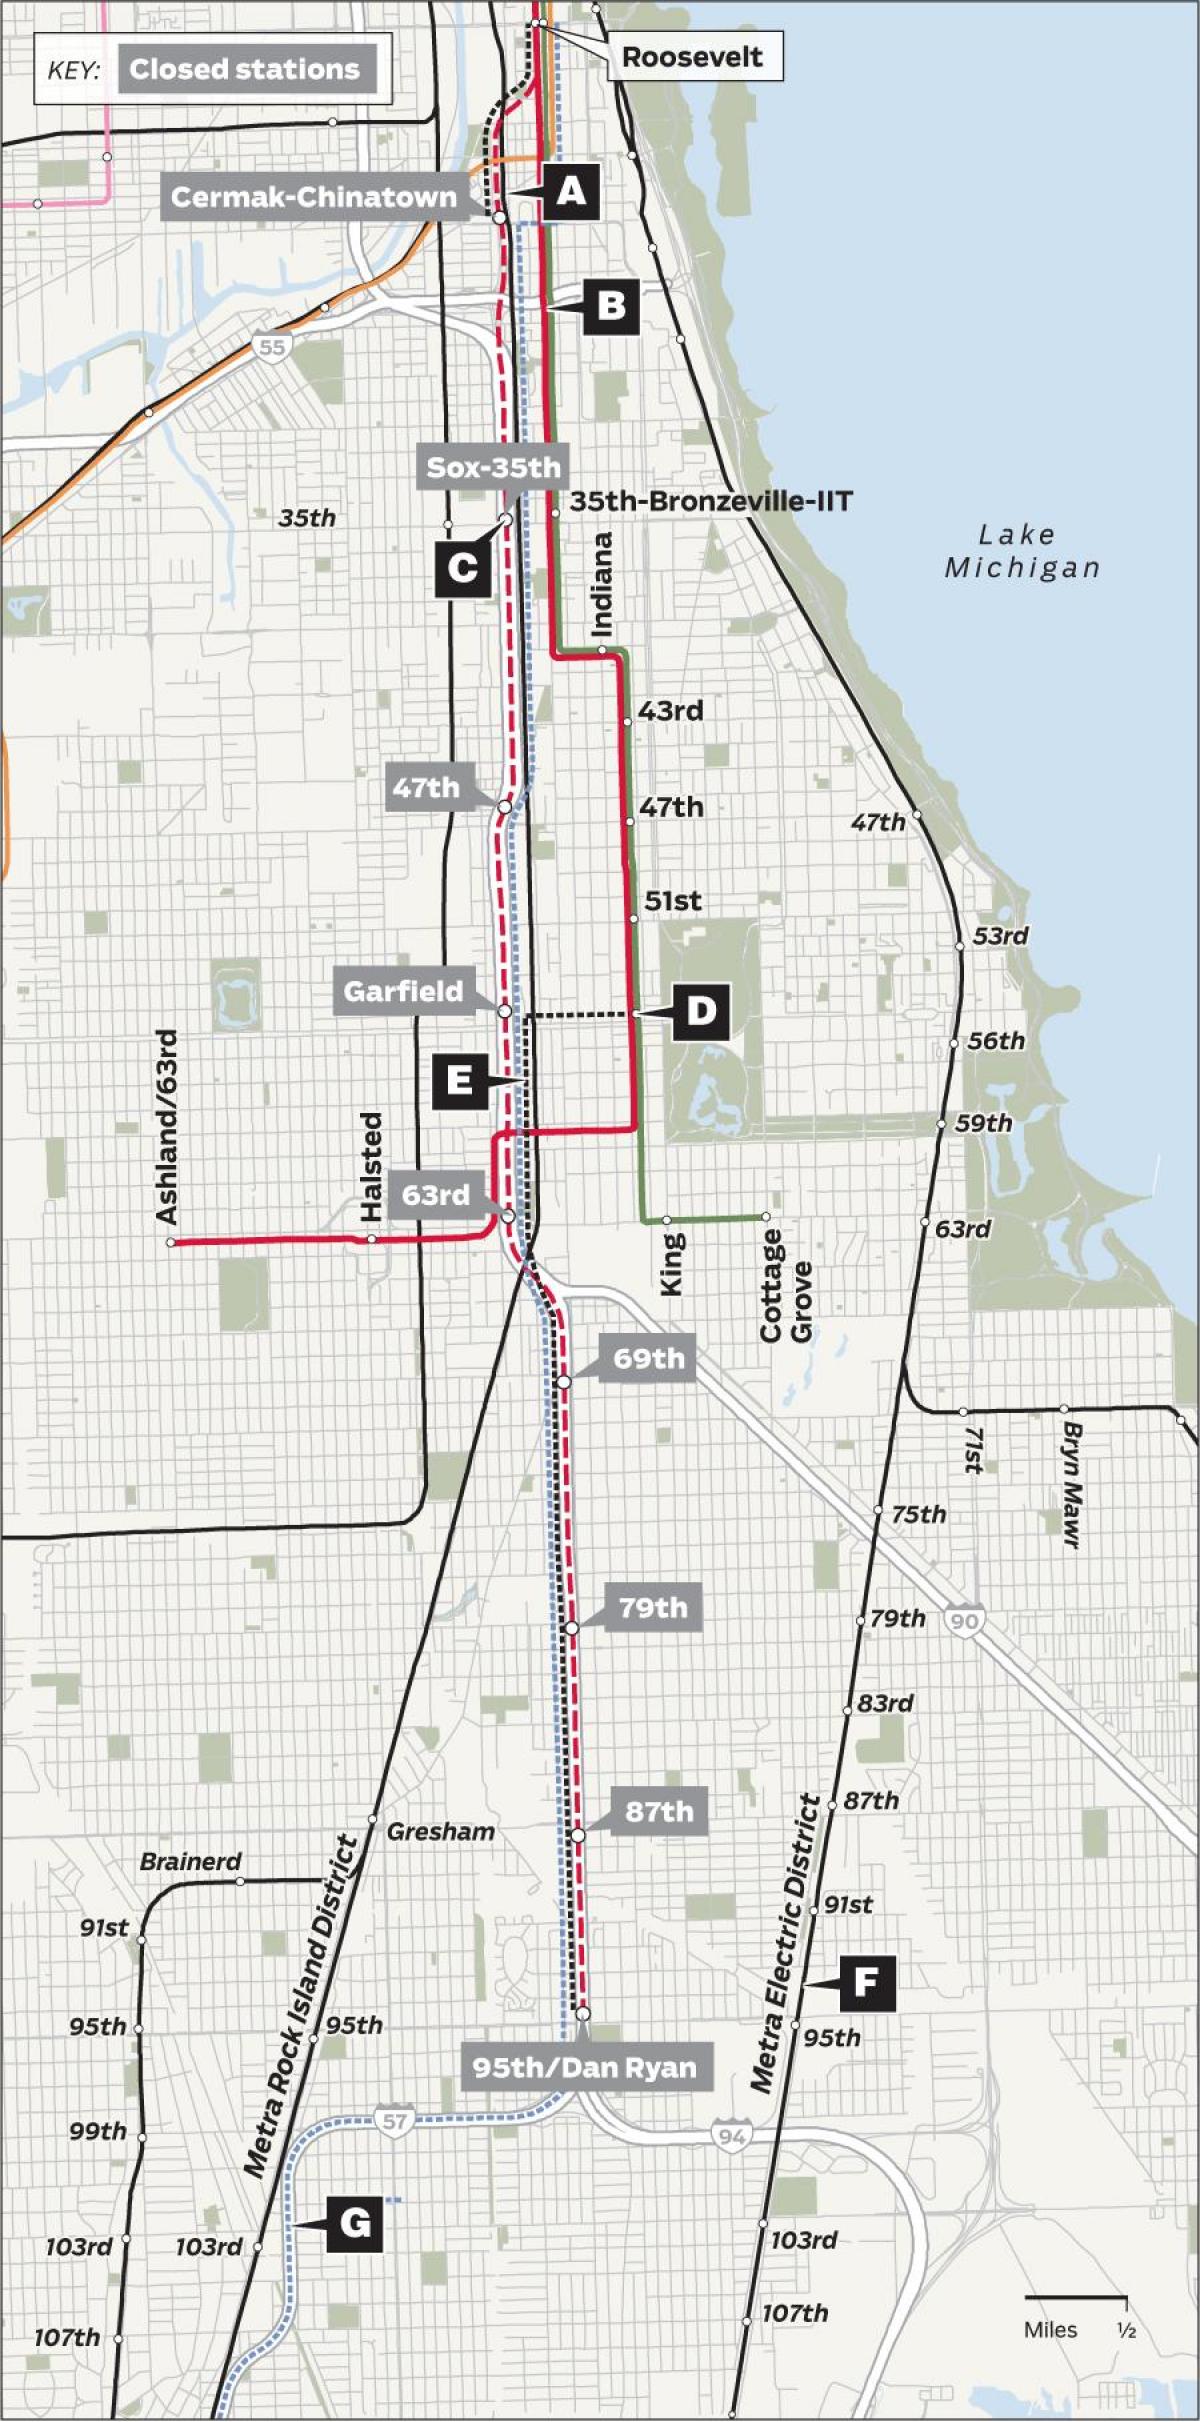 redline Chicago peta